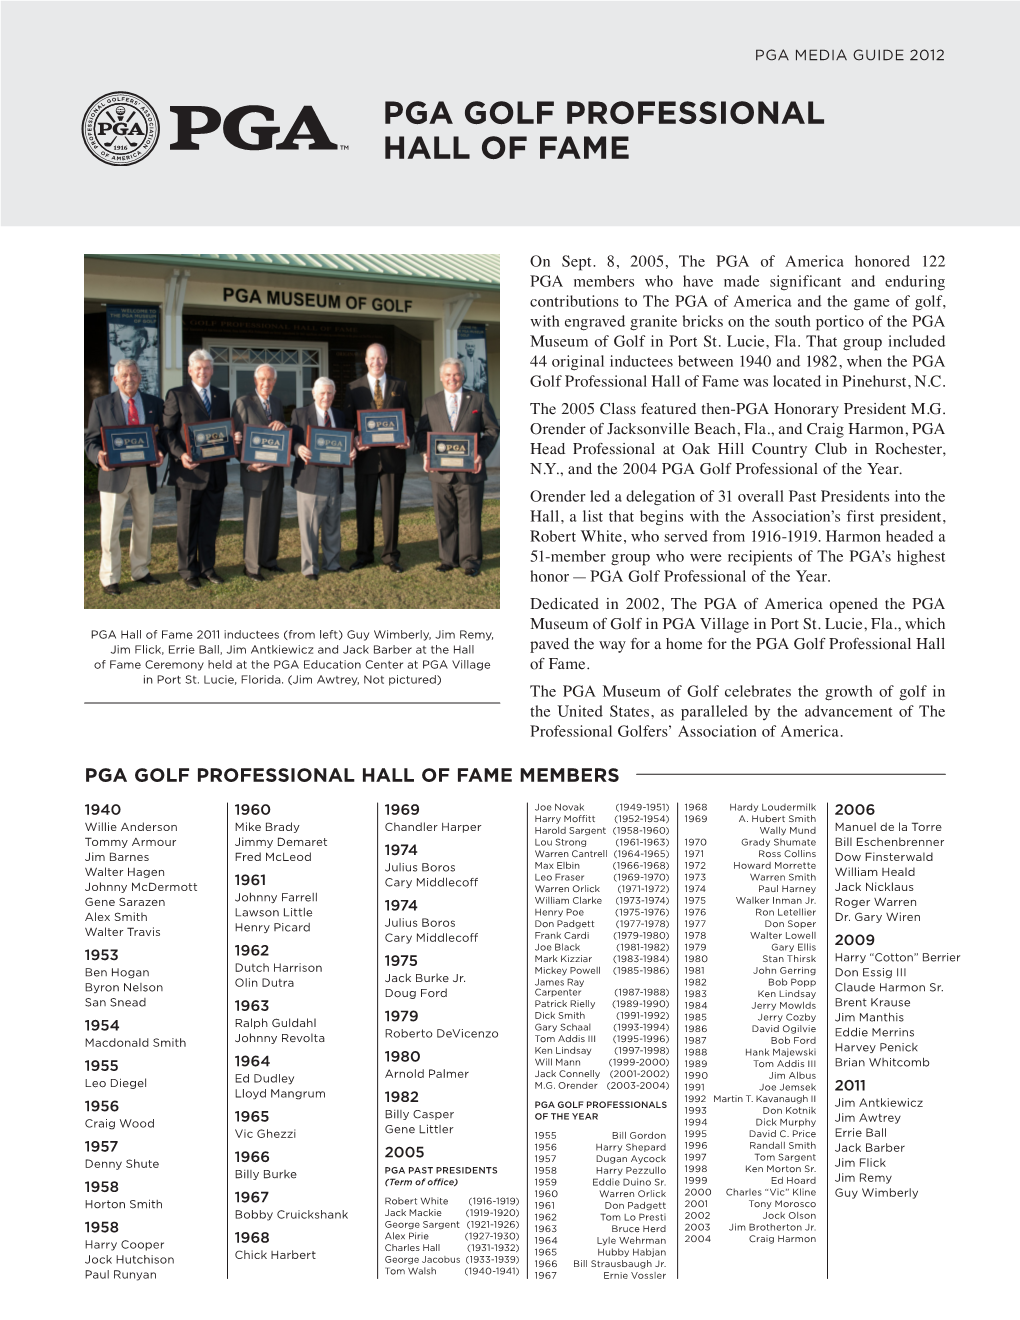 Pga Golf Professional Hall of Fame